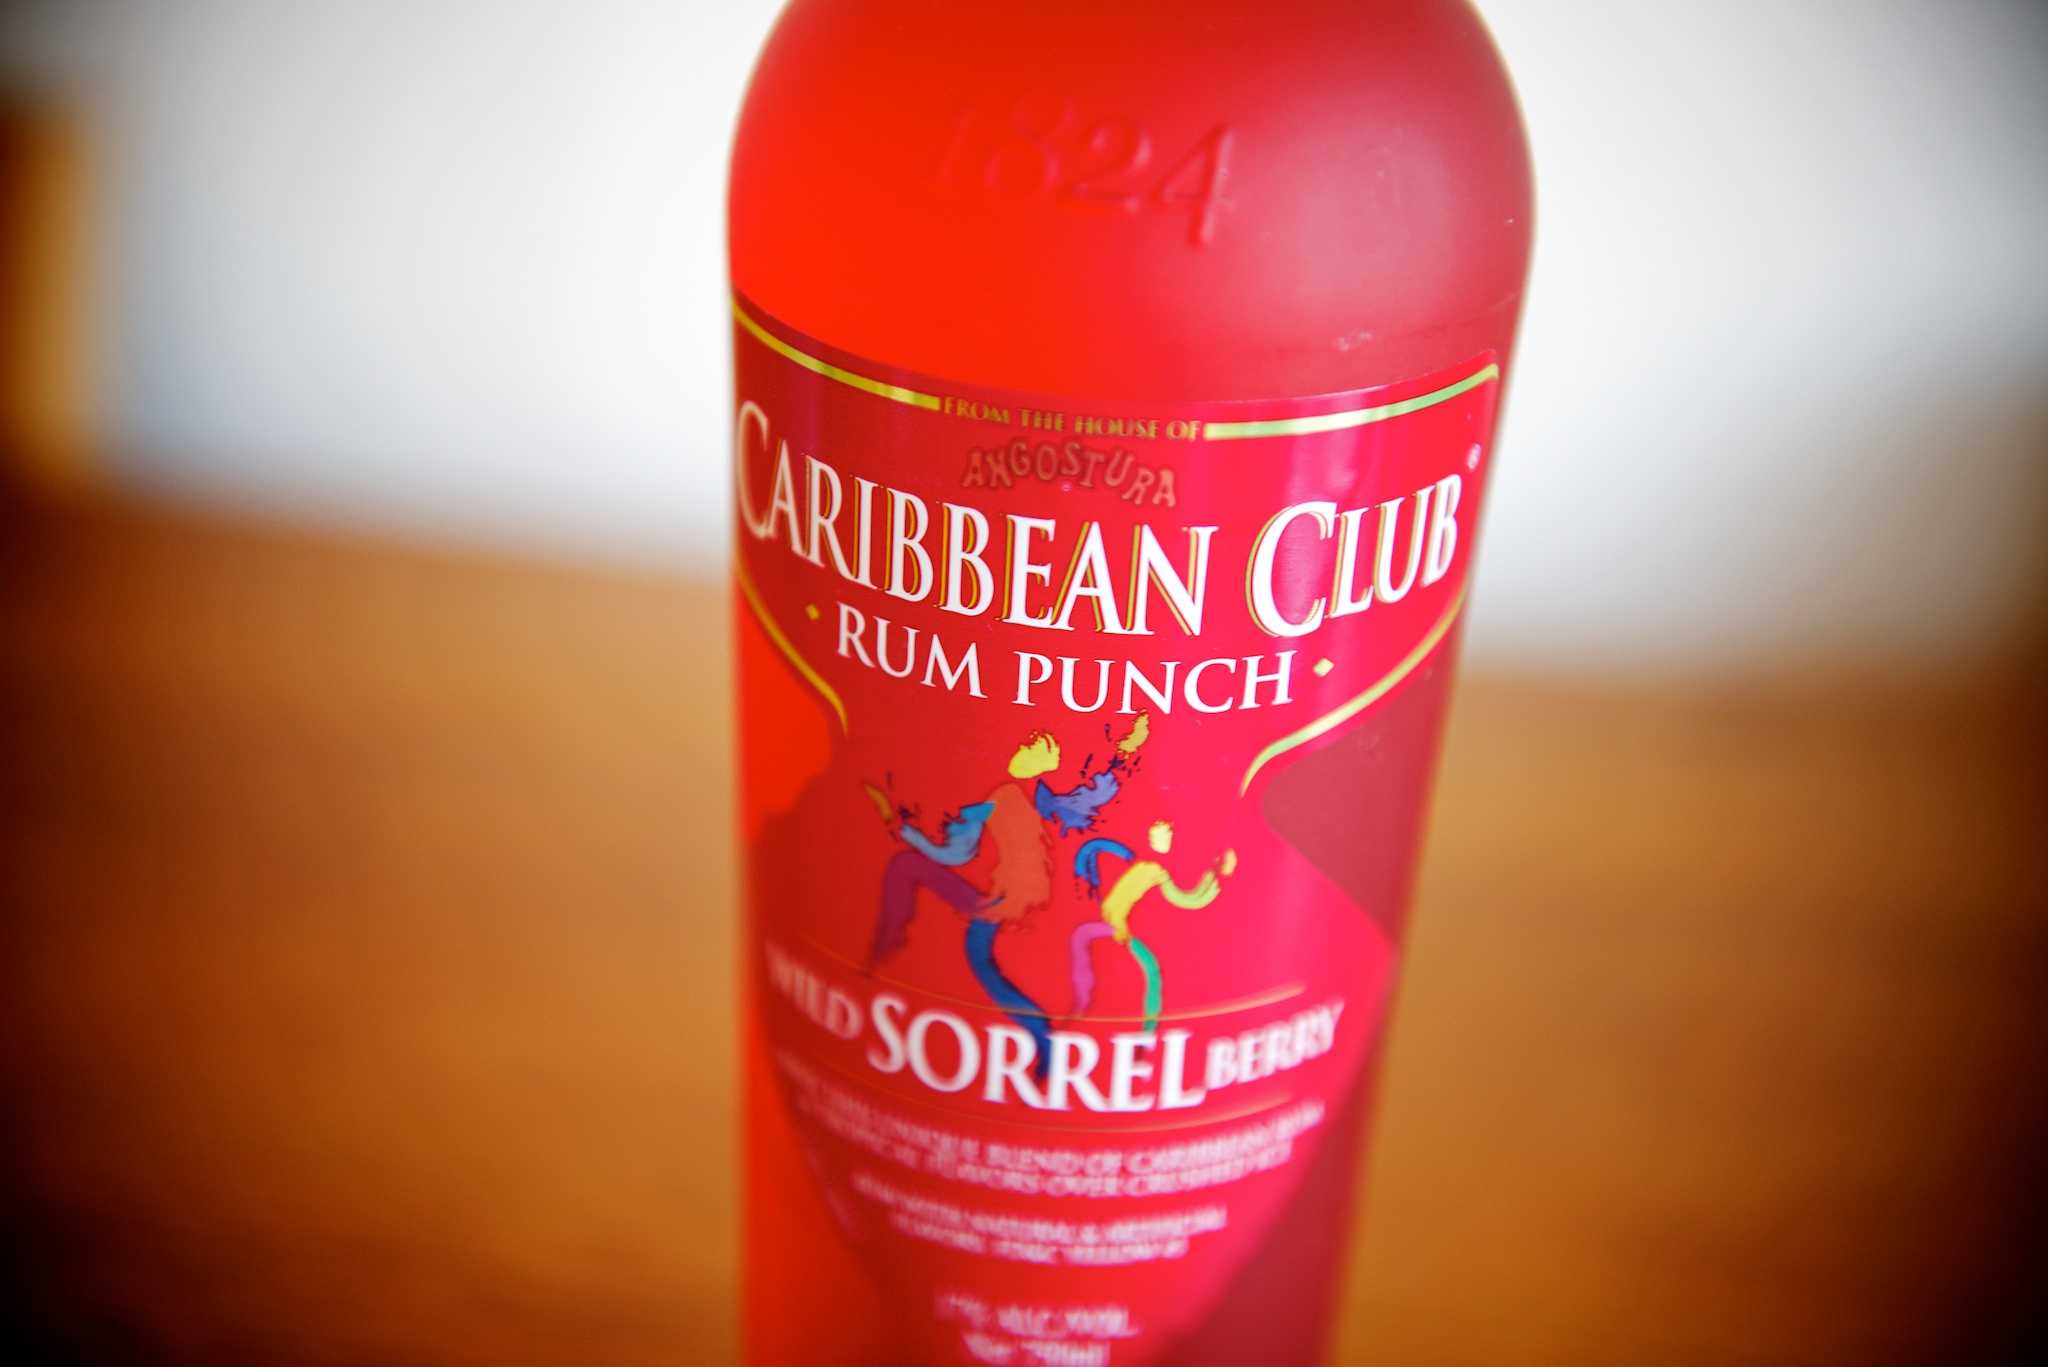 Angostura Caribbean Club Wild Sorrel Berry Rum Punch